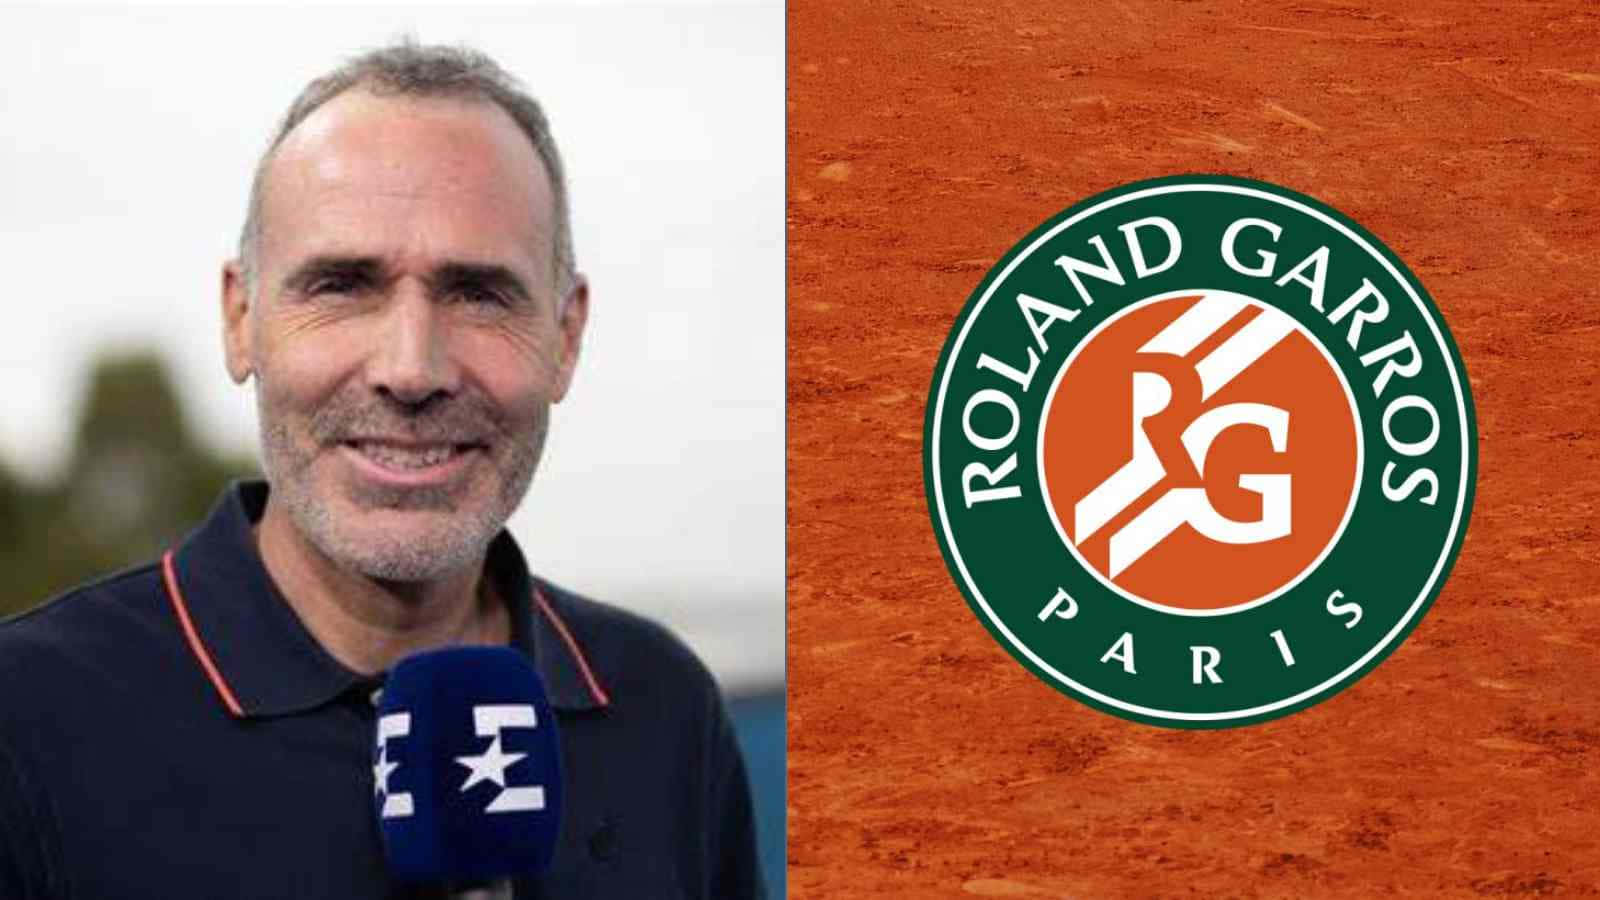 Alex Corretja Roland-Garros Logo Tapet: Se den røde grusbane på dette Roland-Garros logo tapet. Wallpaper